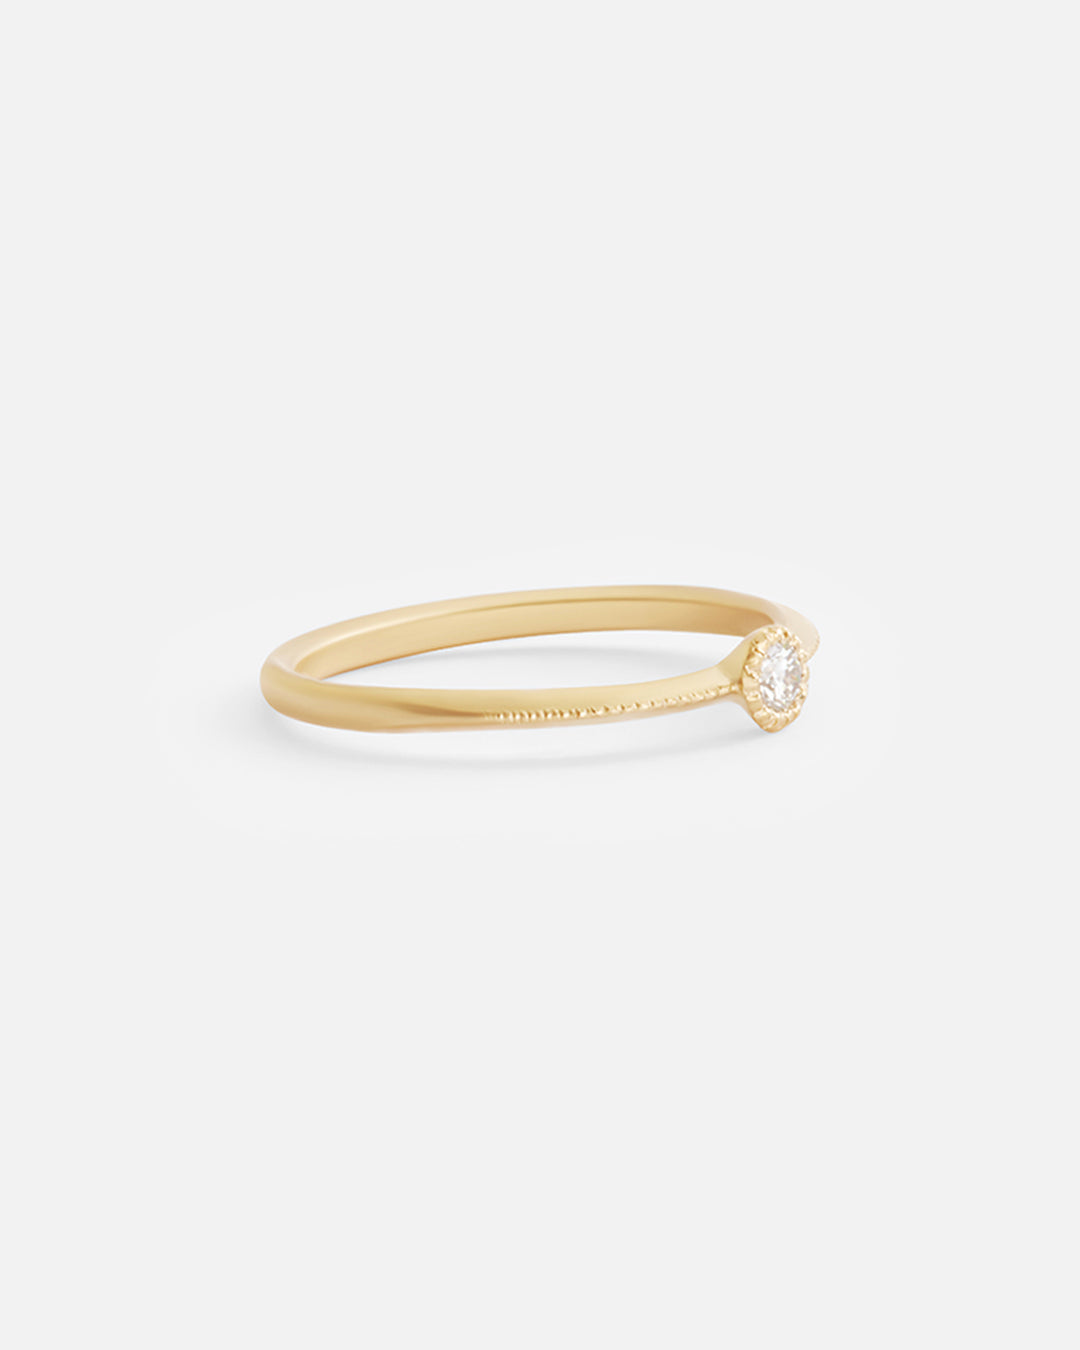 Buy Gorgeous Wedding Ring Design Single White Stone One Gram Gold Ring for  Women